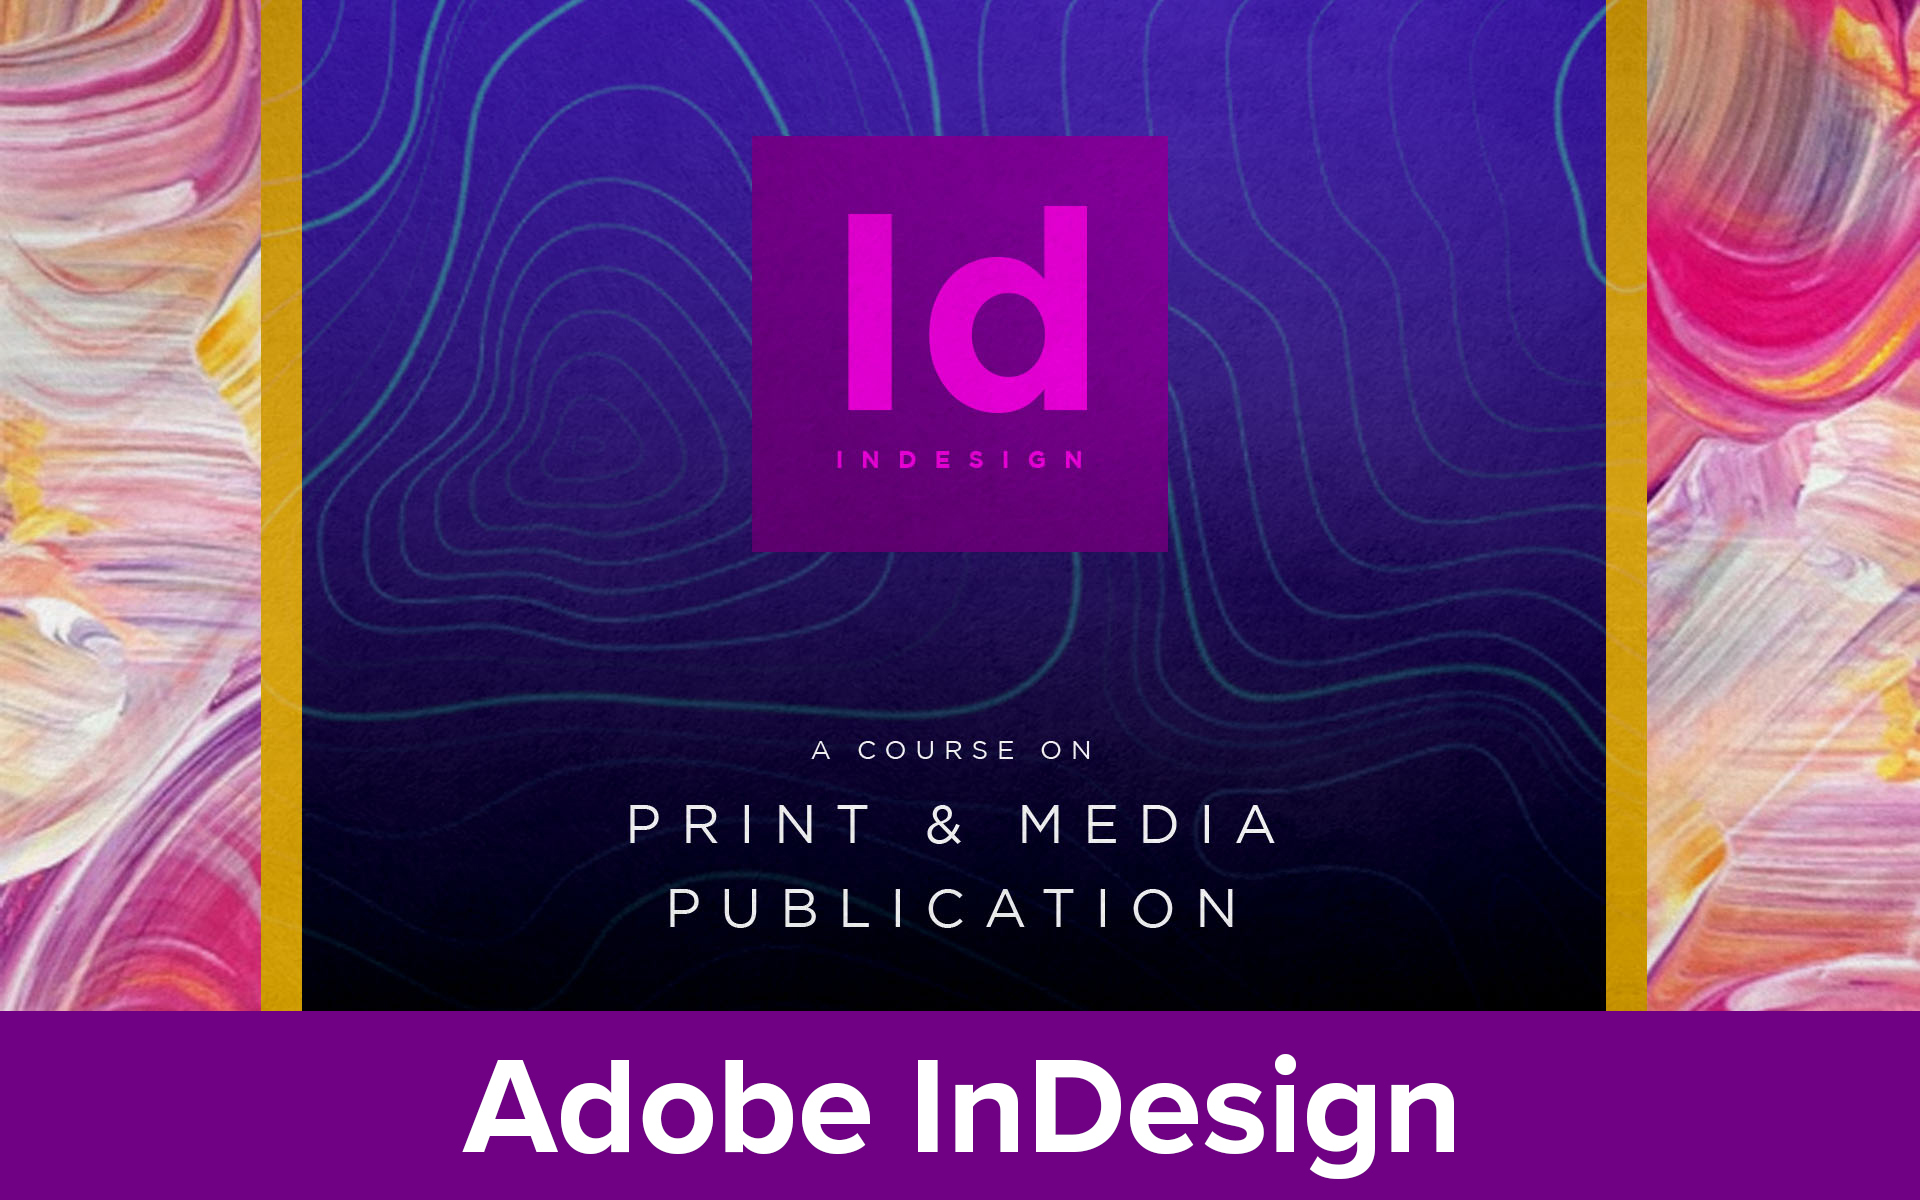 Adobe InDesign Certification Course BrainBuffet